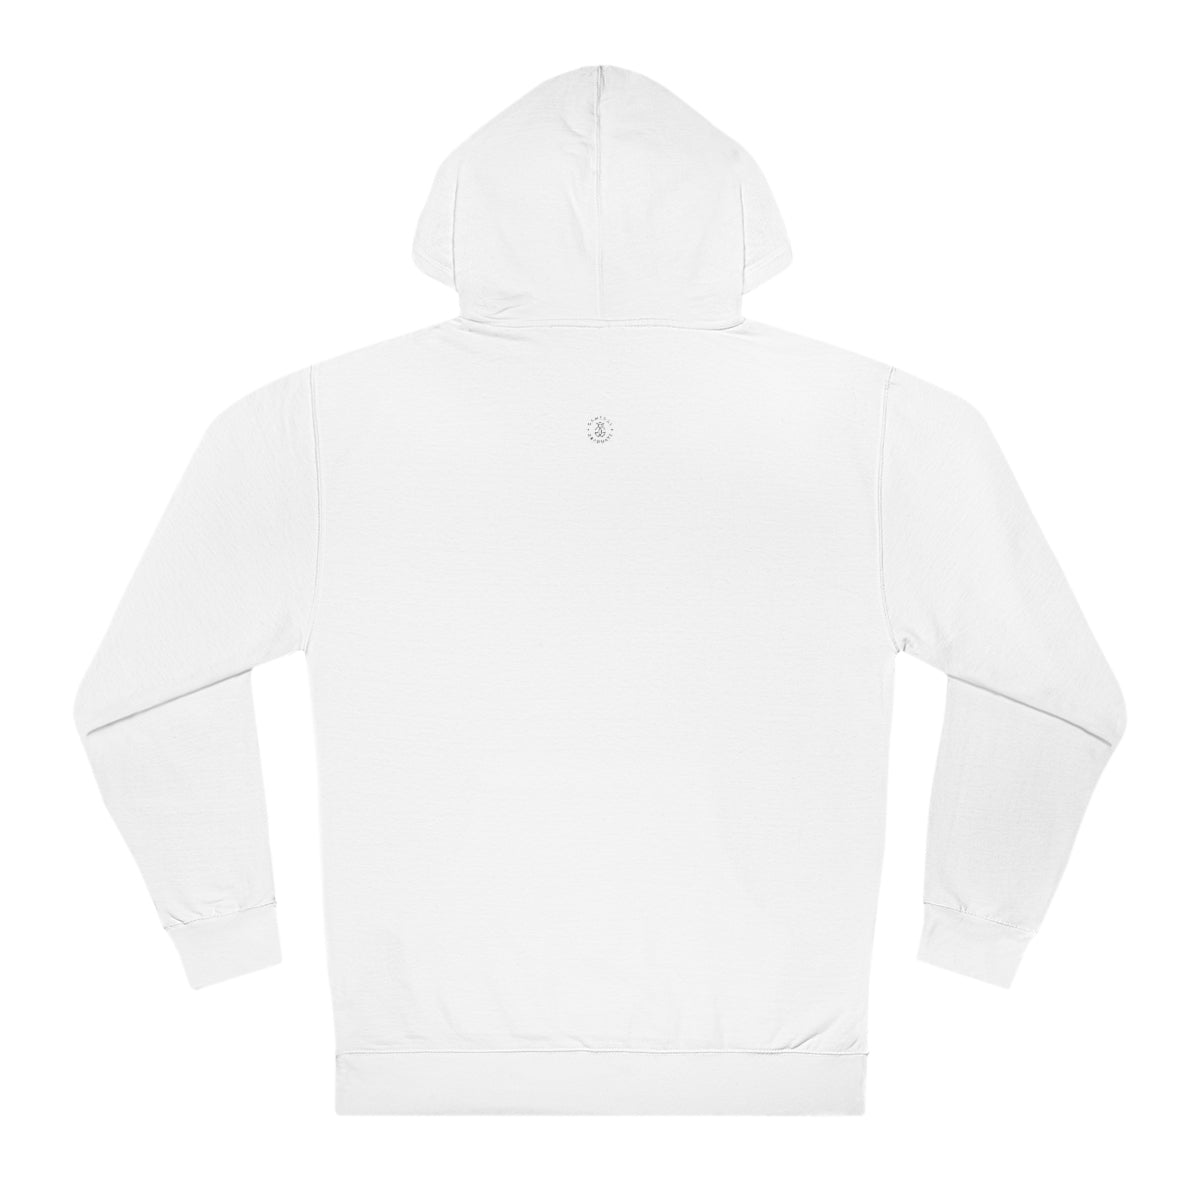 NC State Hooded Sweatshirt - GG - ITC